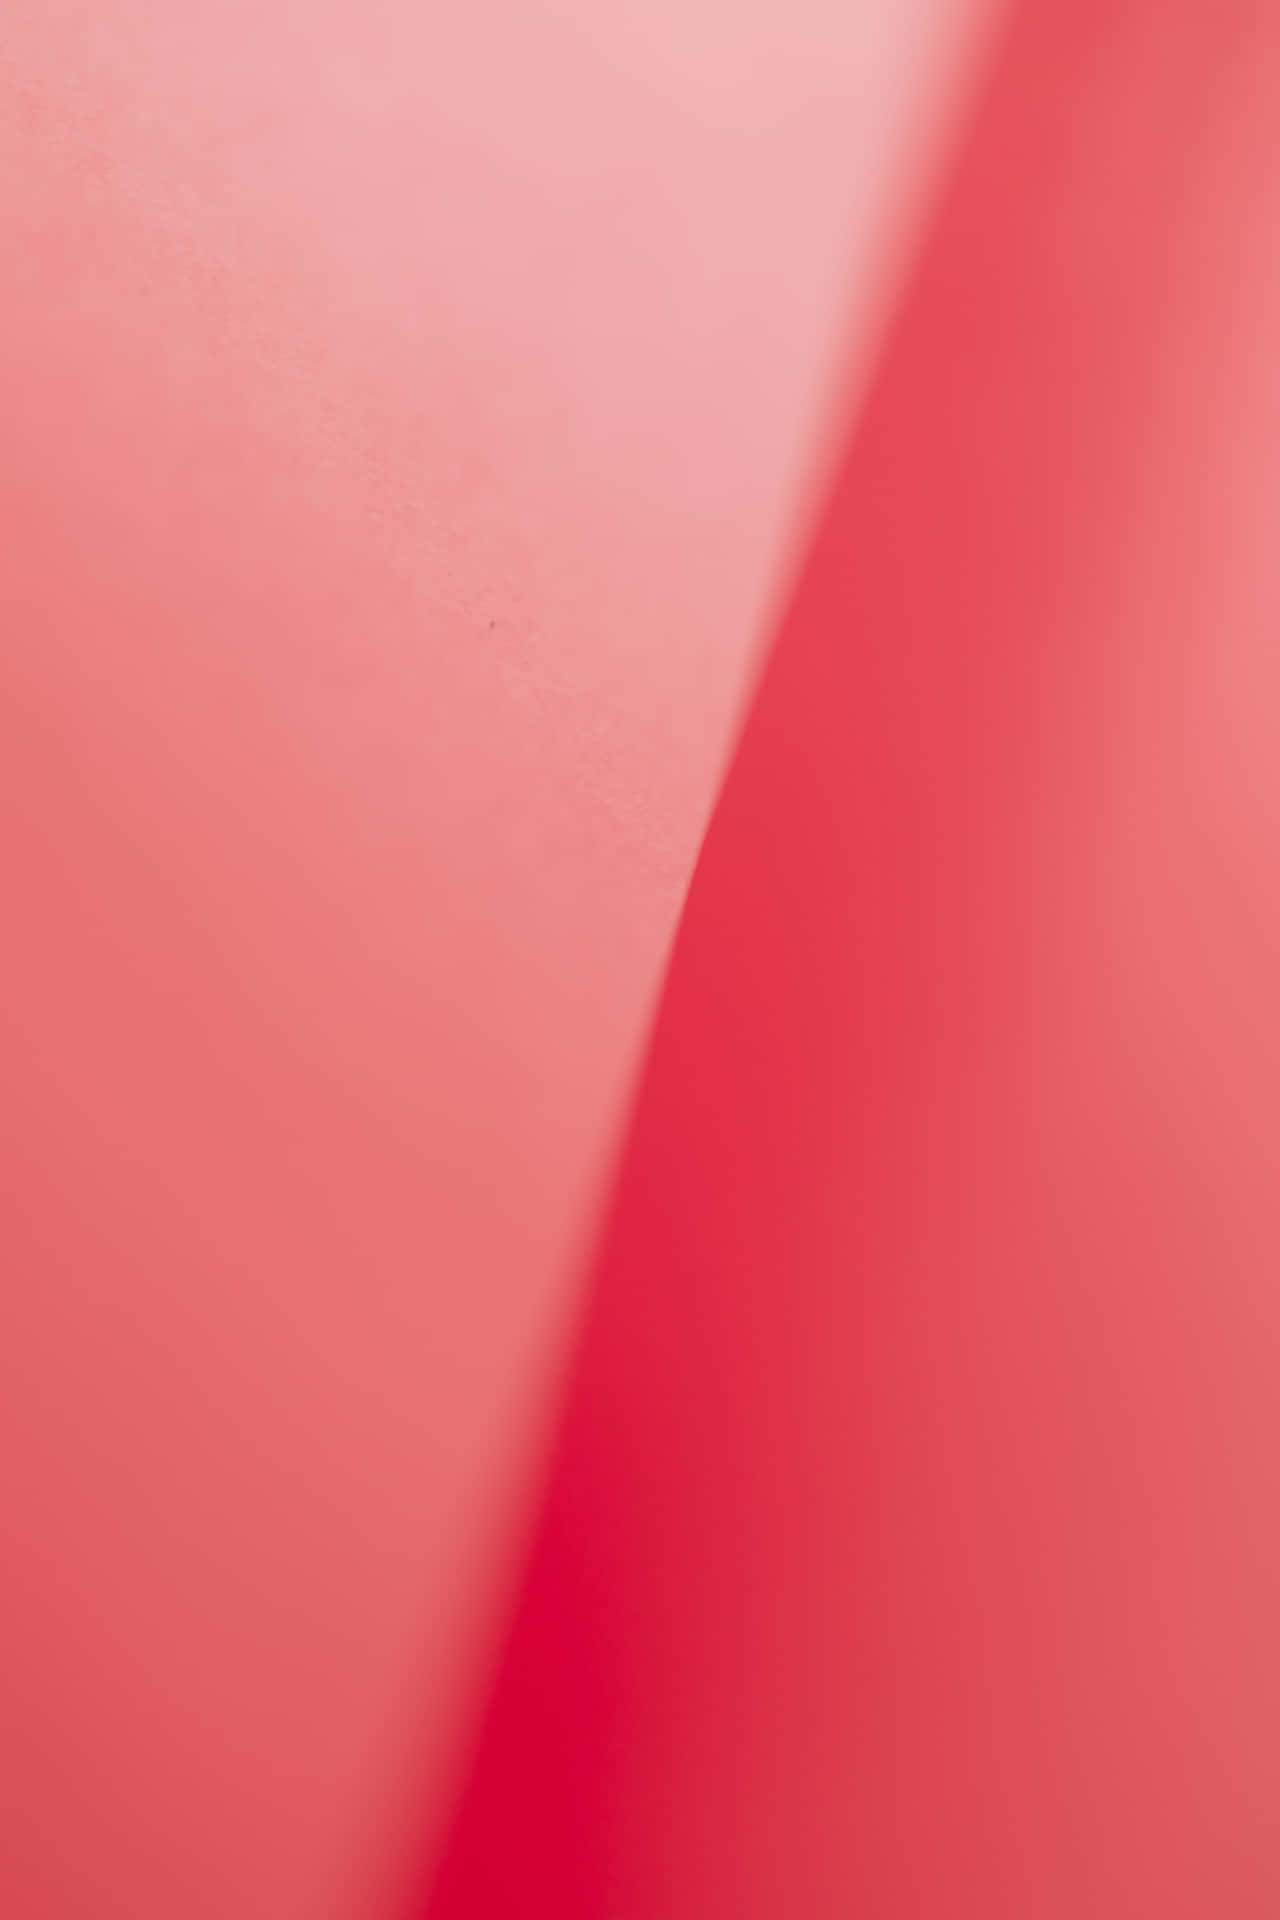 Unhermoso Diseño De Papel Tapiz Rosa Con Un Sutil Toque De Elegancia. Fondo de pantalla